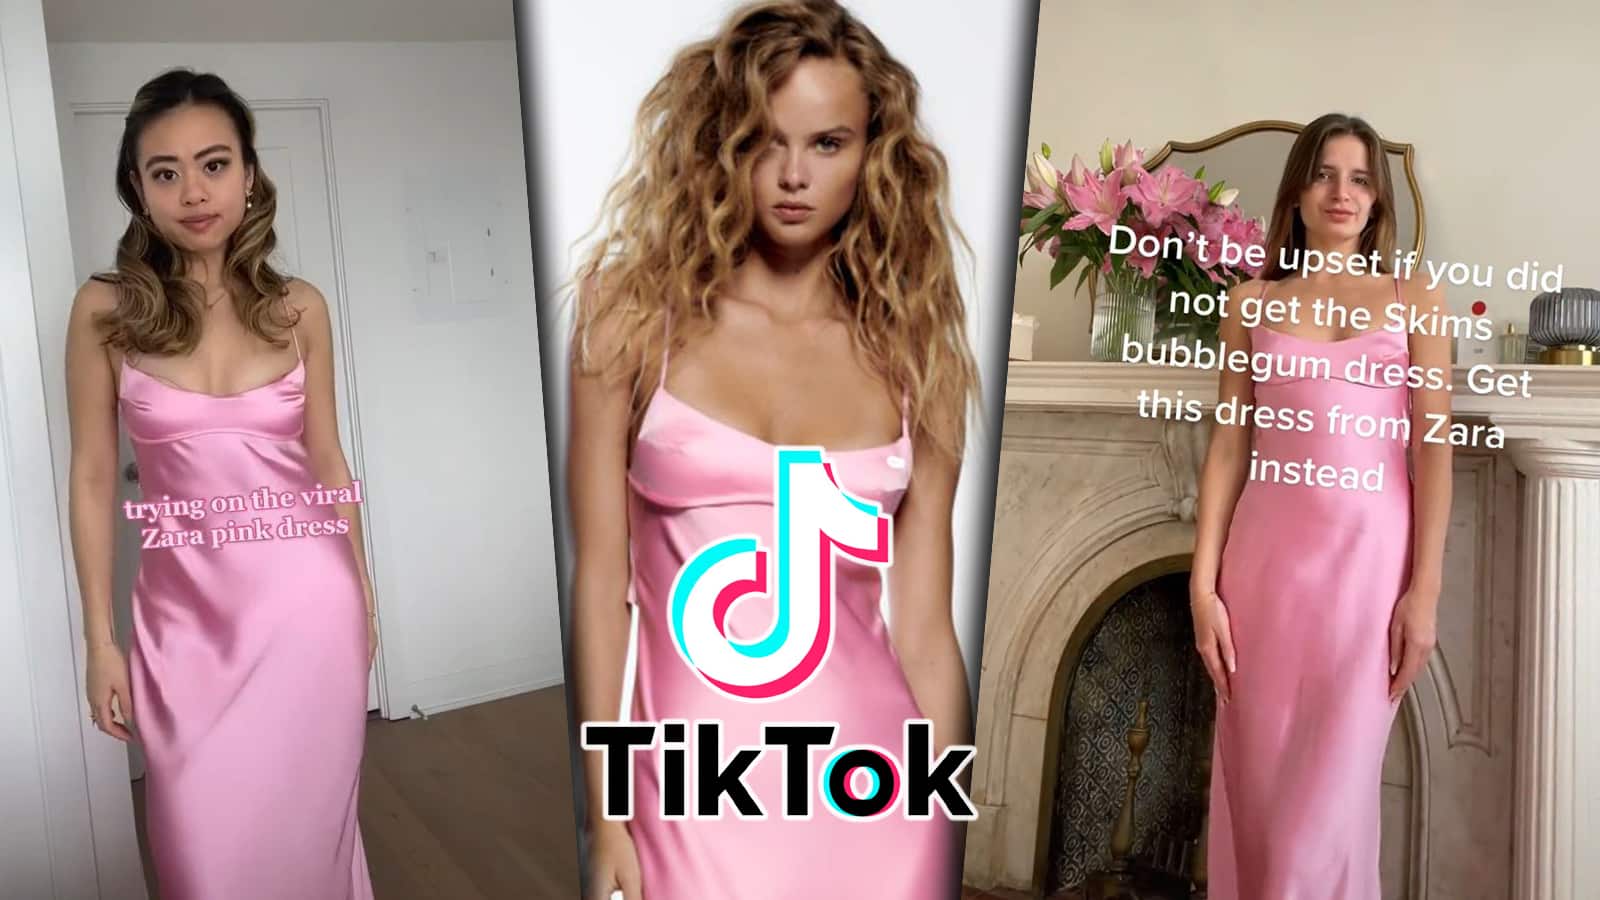 Pink Zara dress costing £45.99 becomes a viral sensation